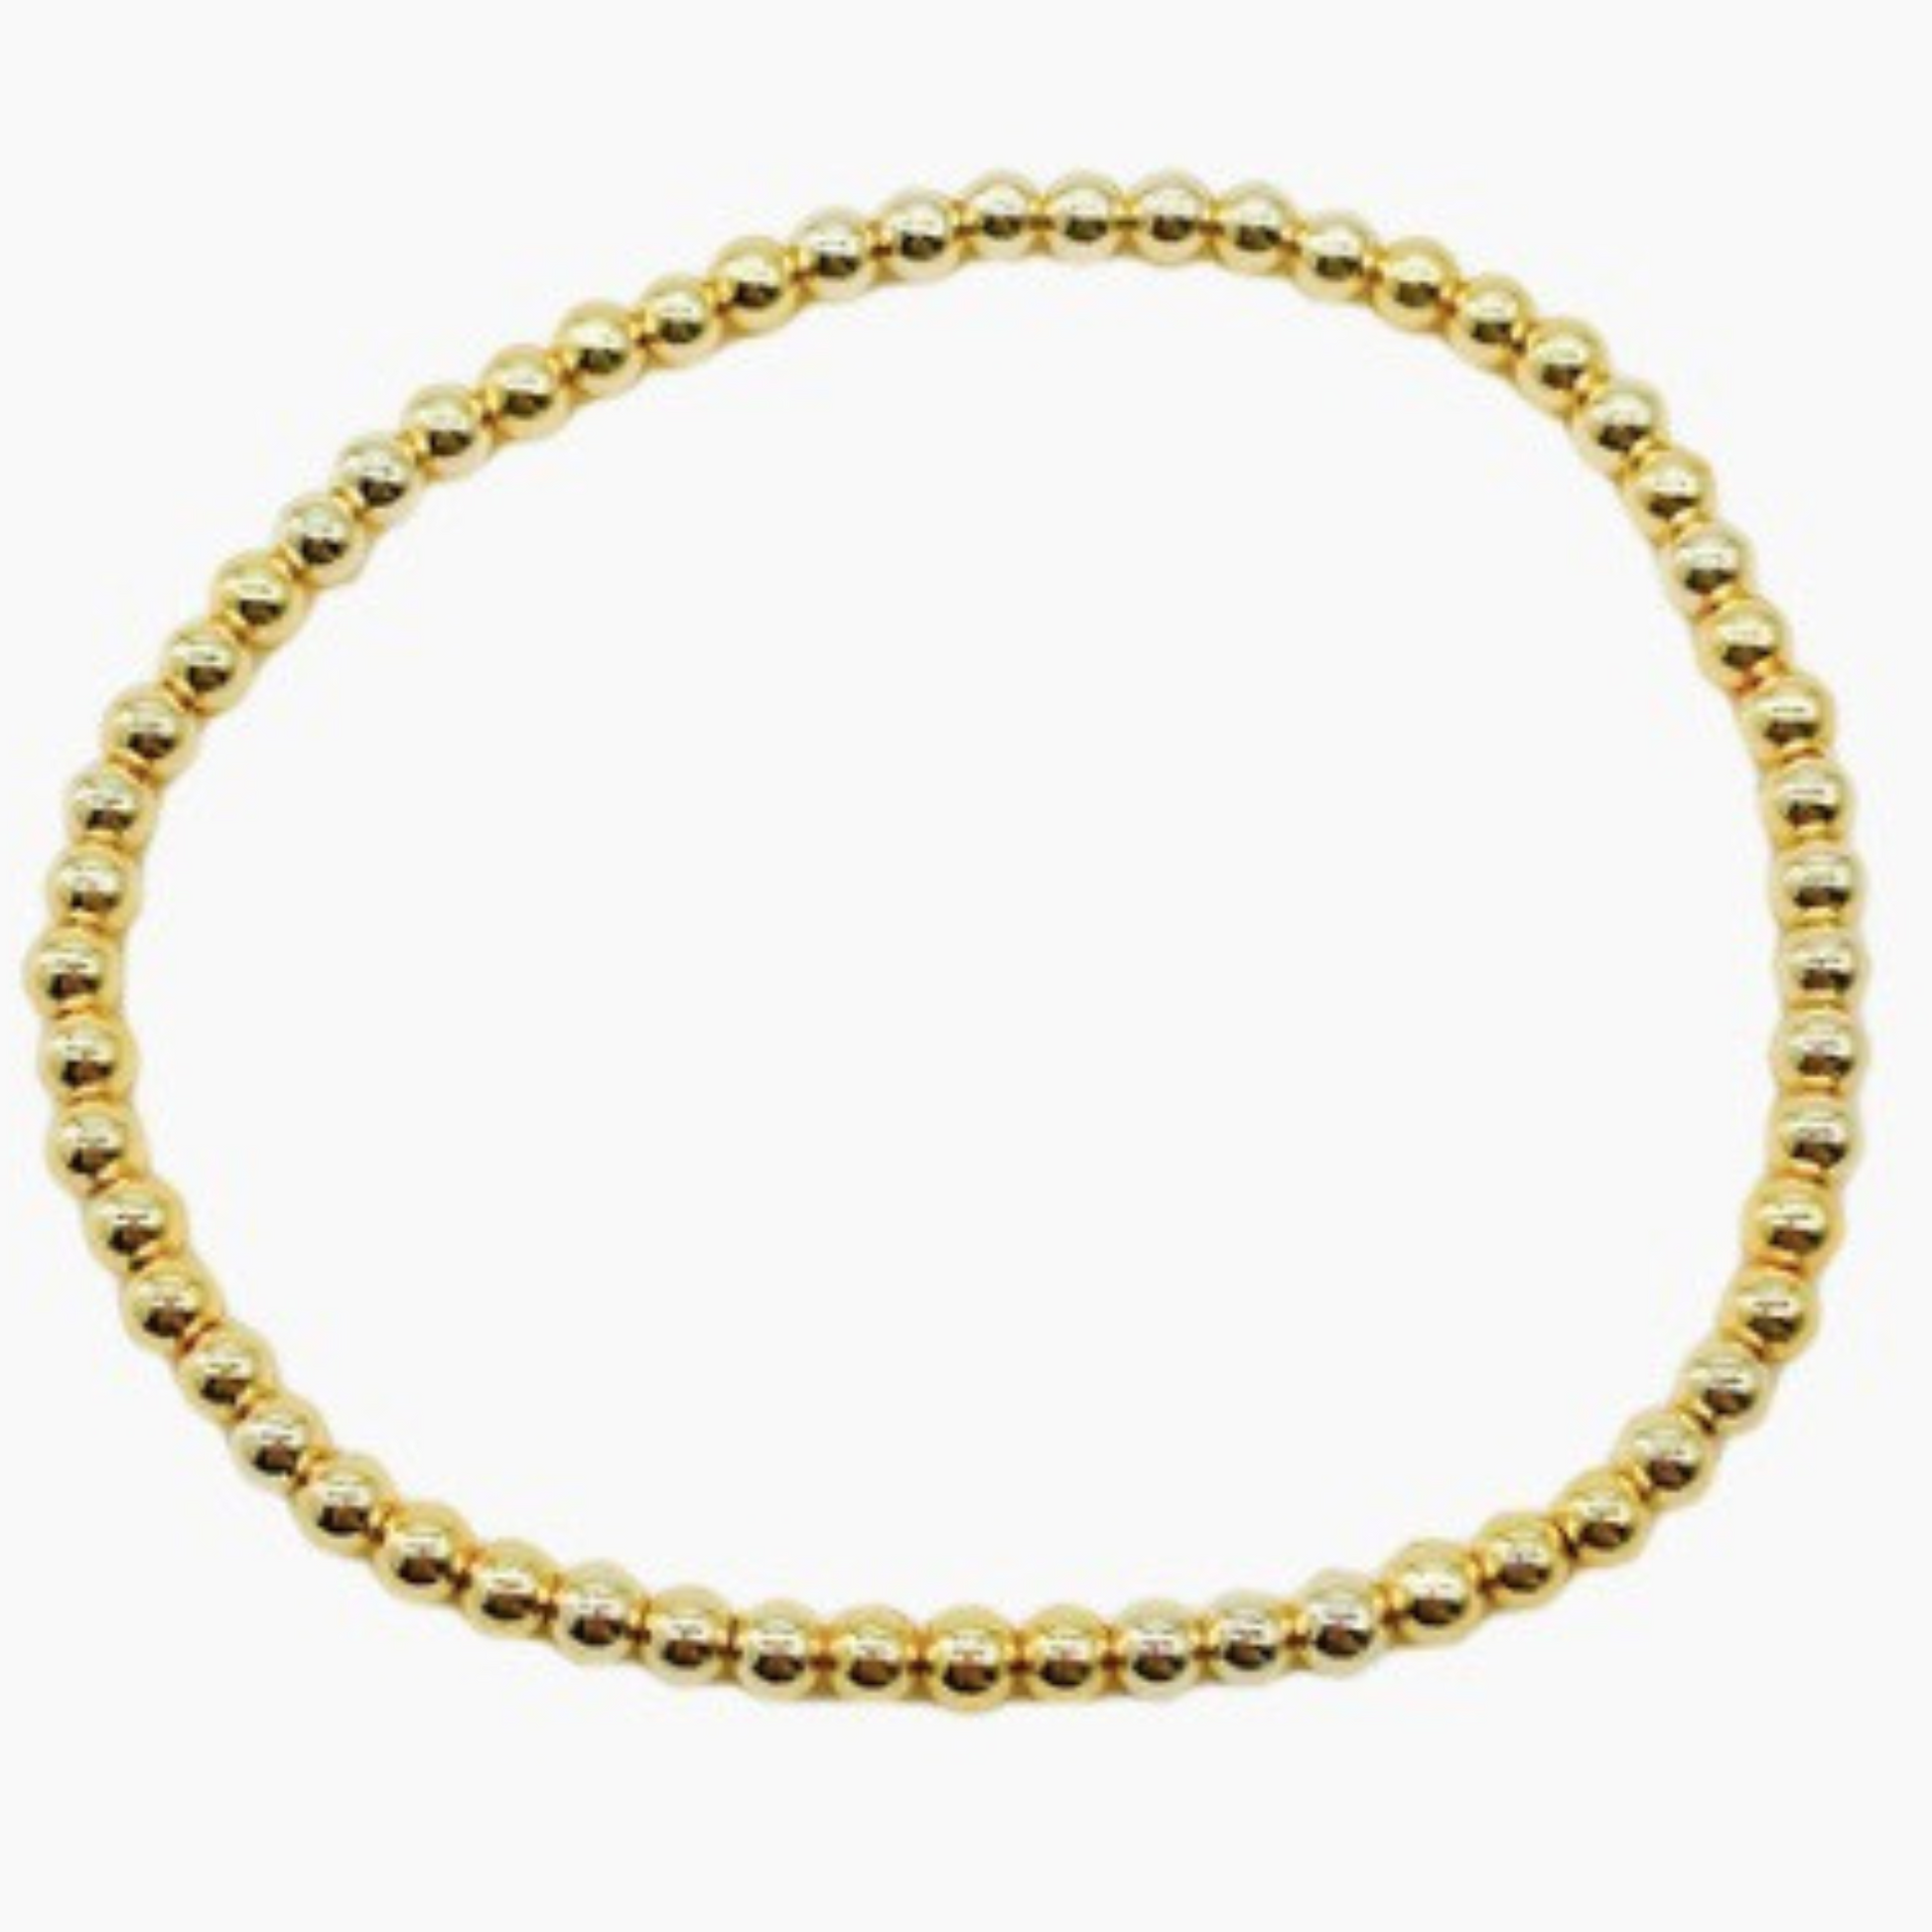 Small bead gold stretchy bracelet